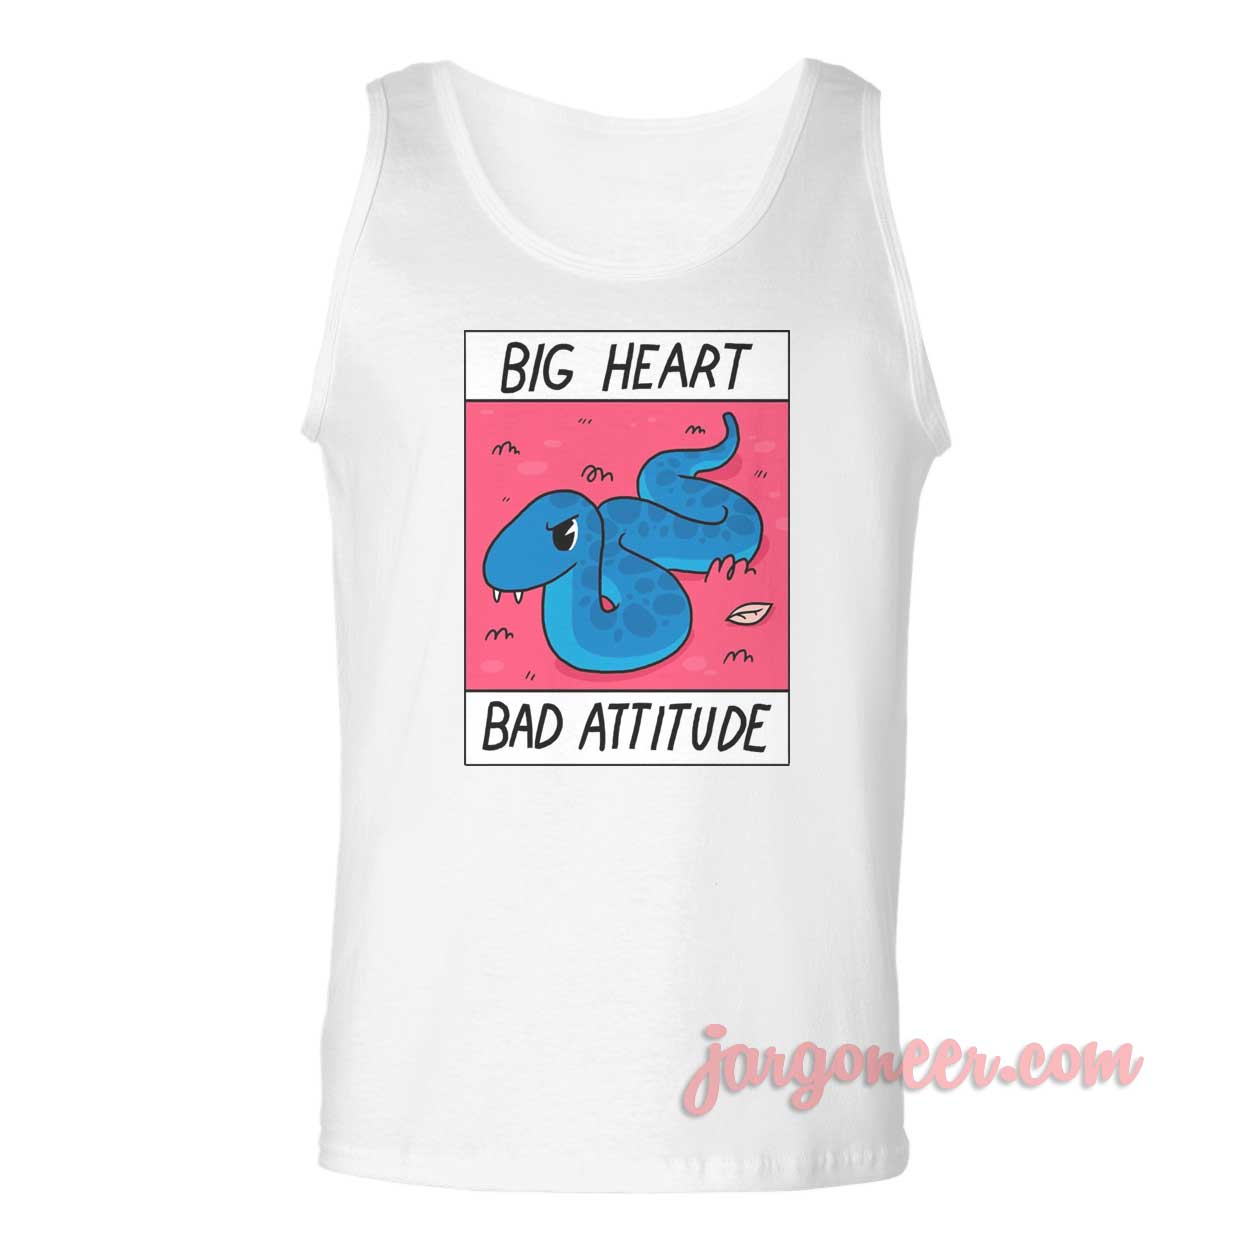 Gig Heart Bad Attitude - Shop Unique Graphic Cool Shirt Designs